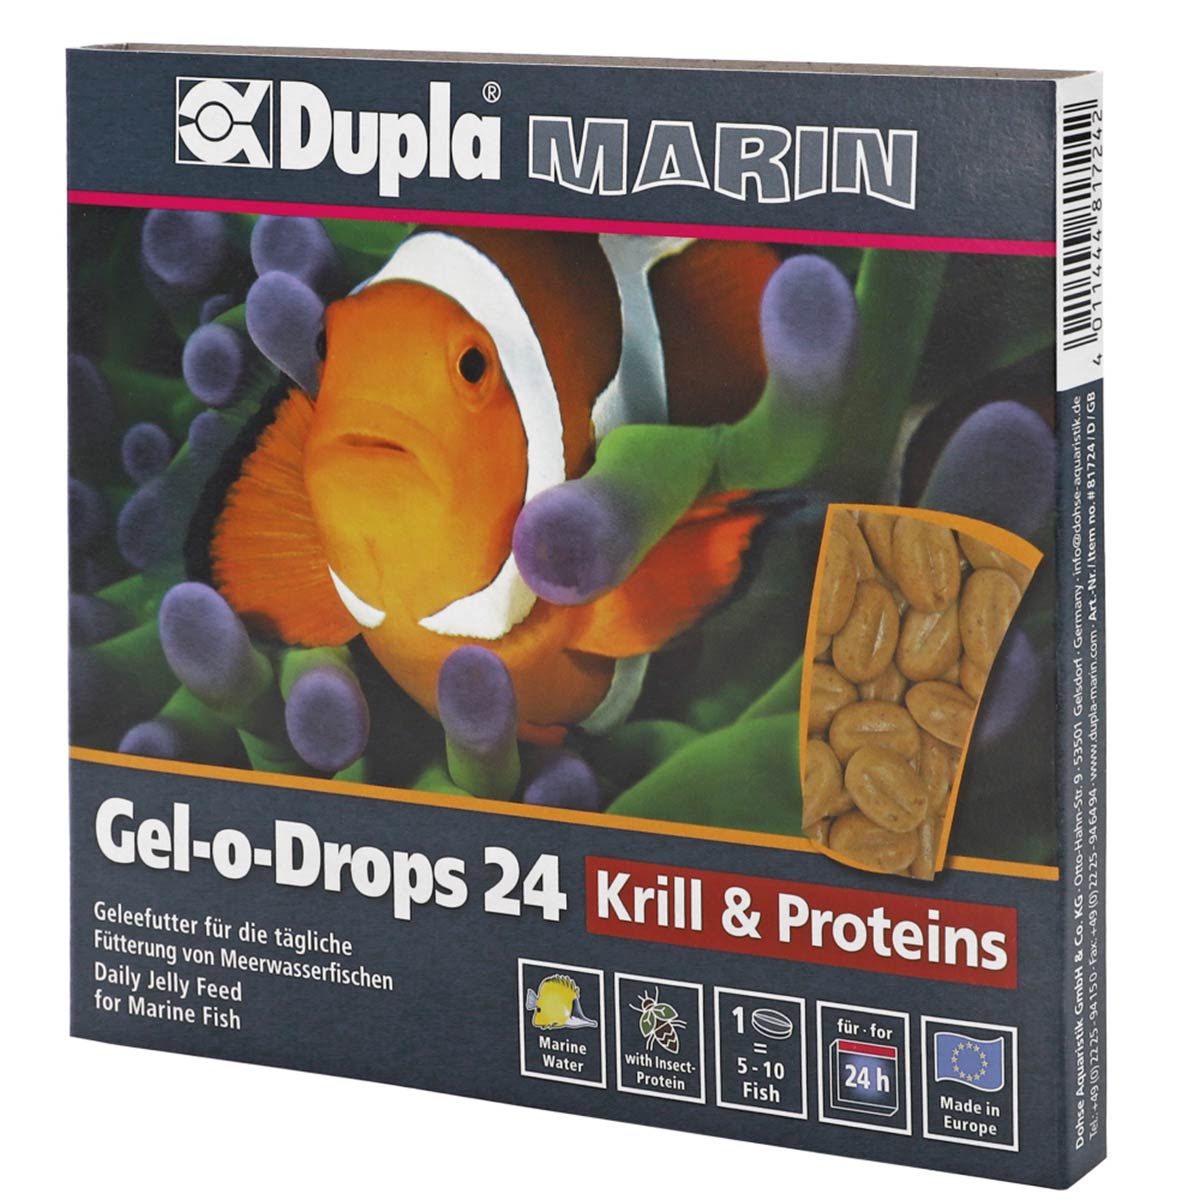 Dupla Marin Gel-o-Drops 24 Krill & Proteins von Dupla Marin